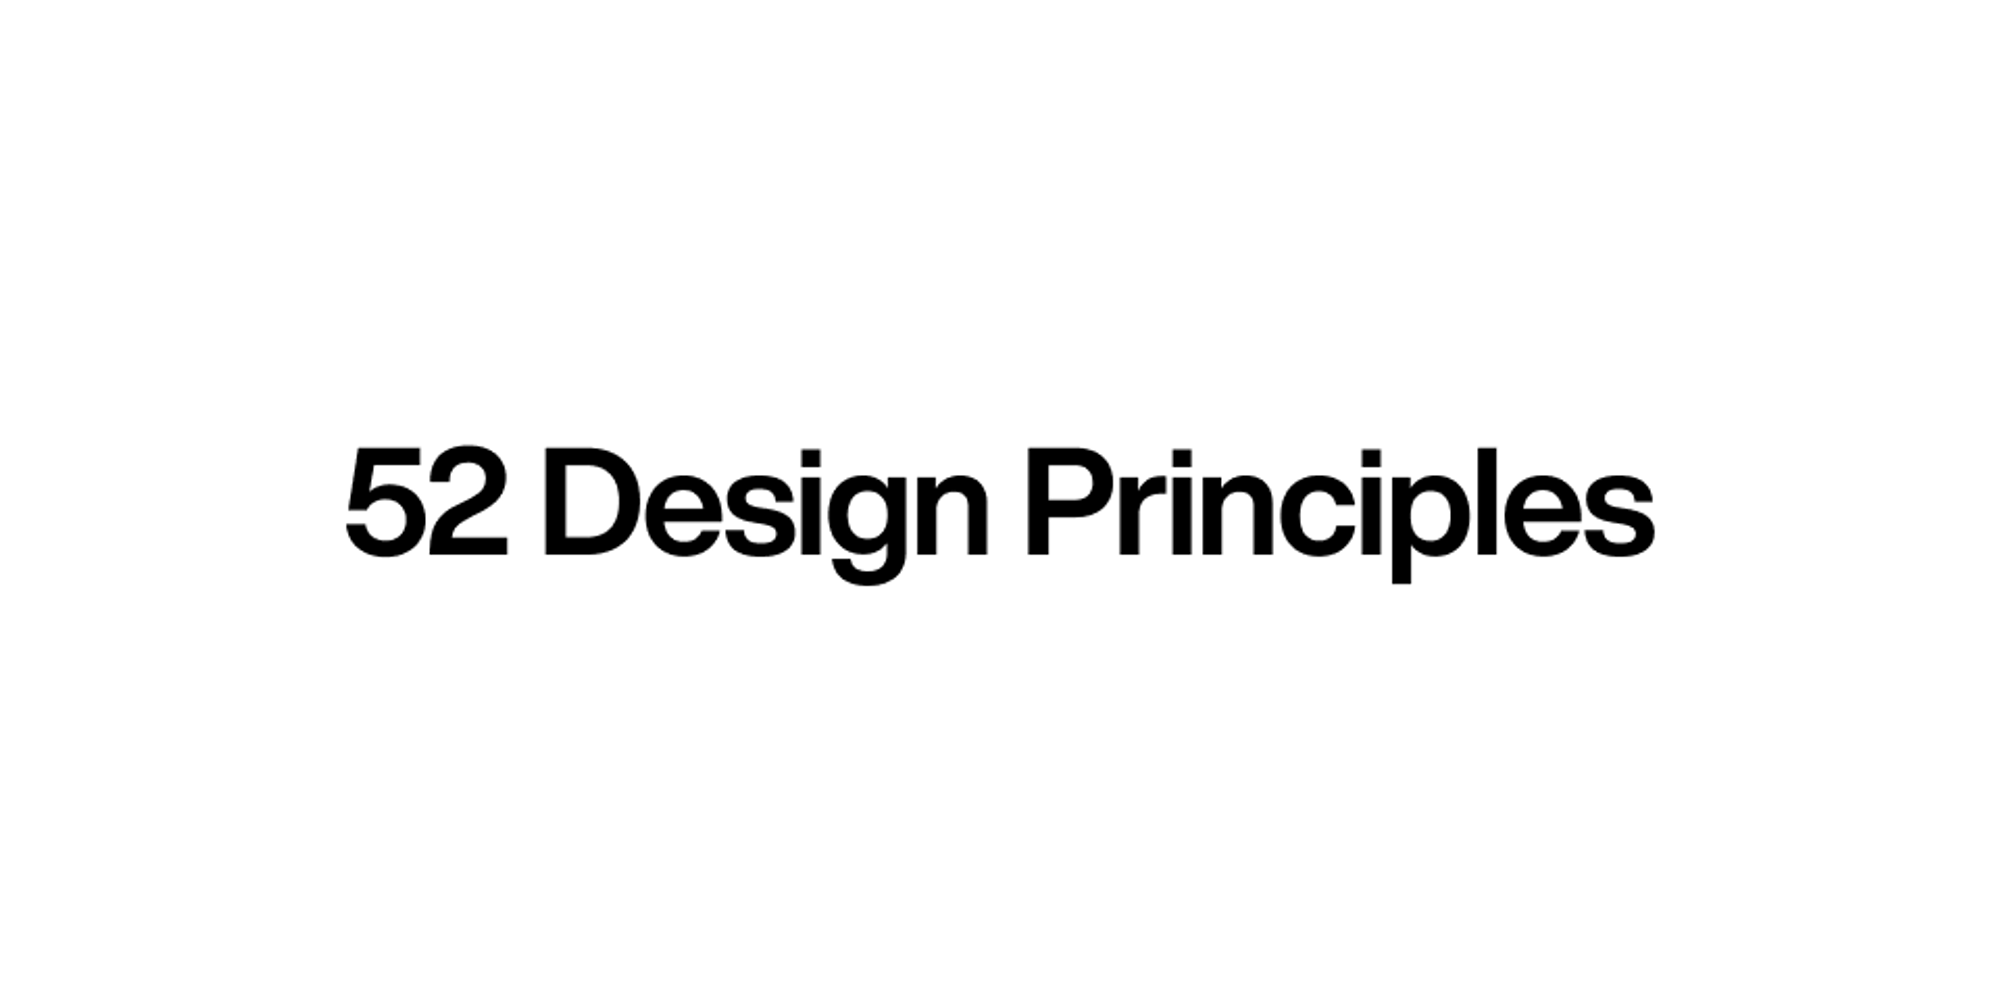 52 Design Principles